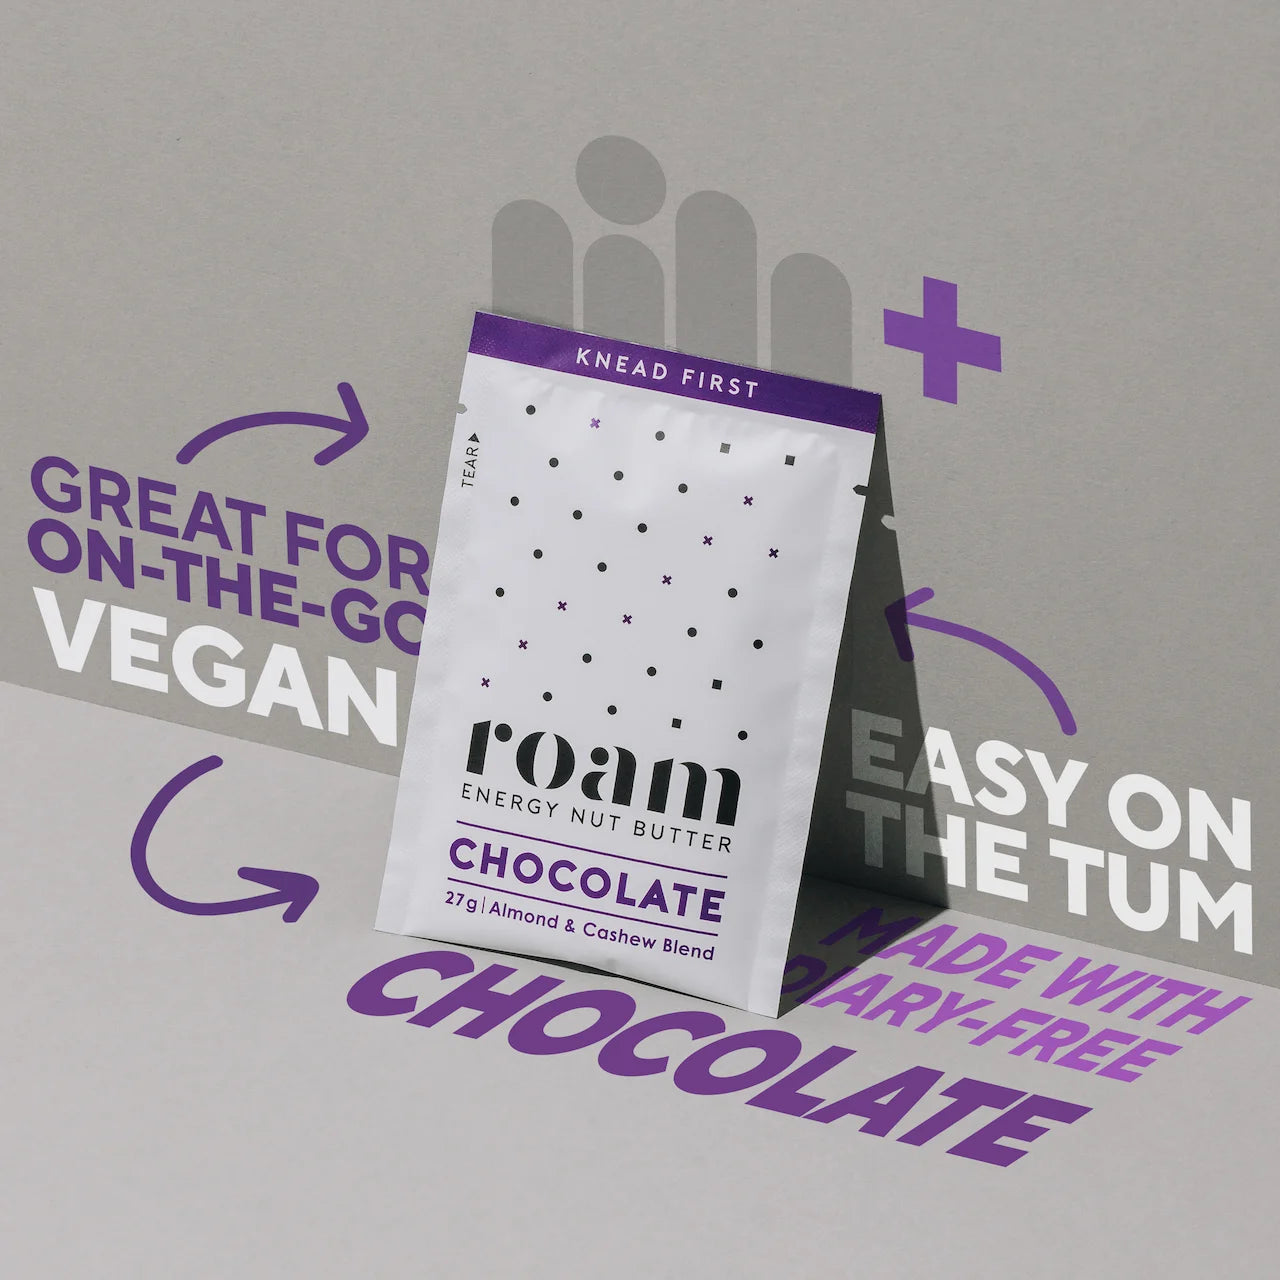 Roam LCHF Energy Nut Butter Chocolate